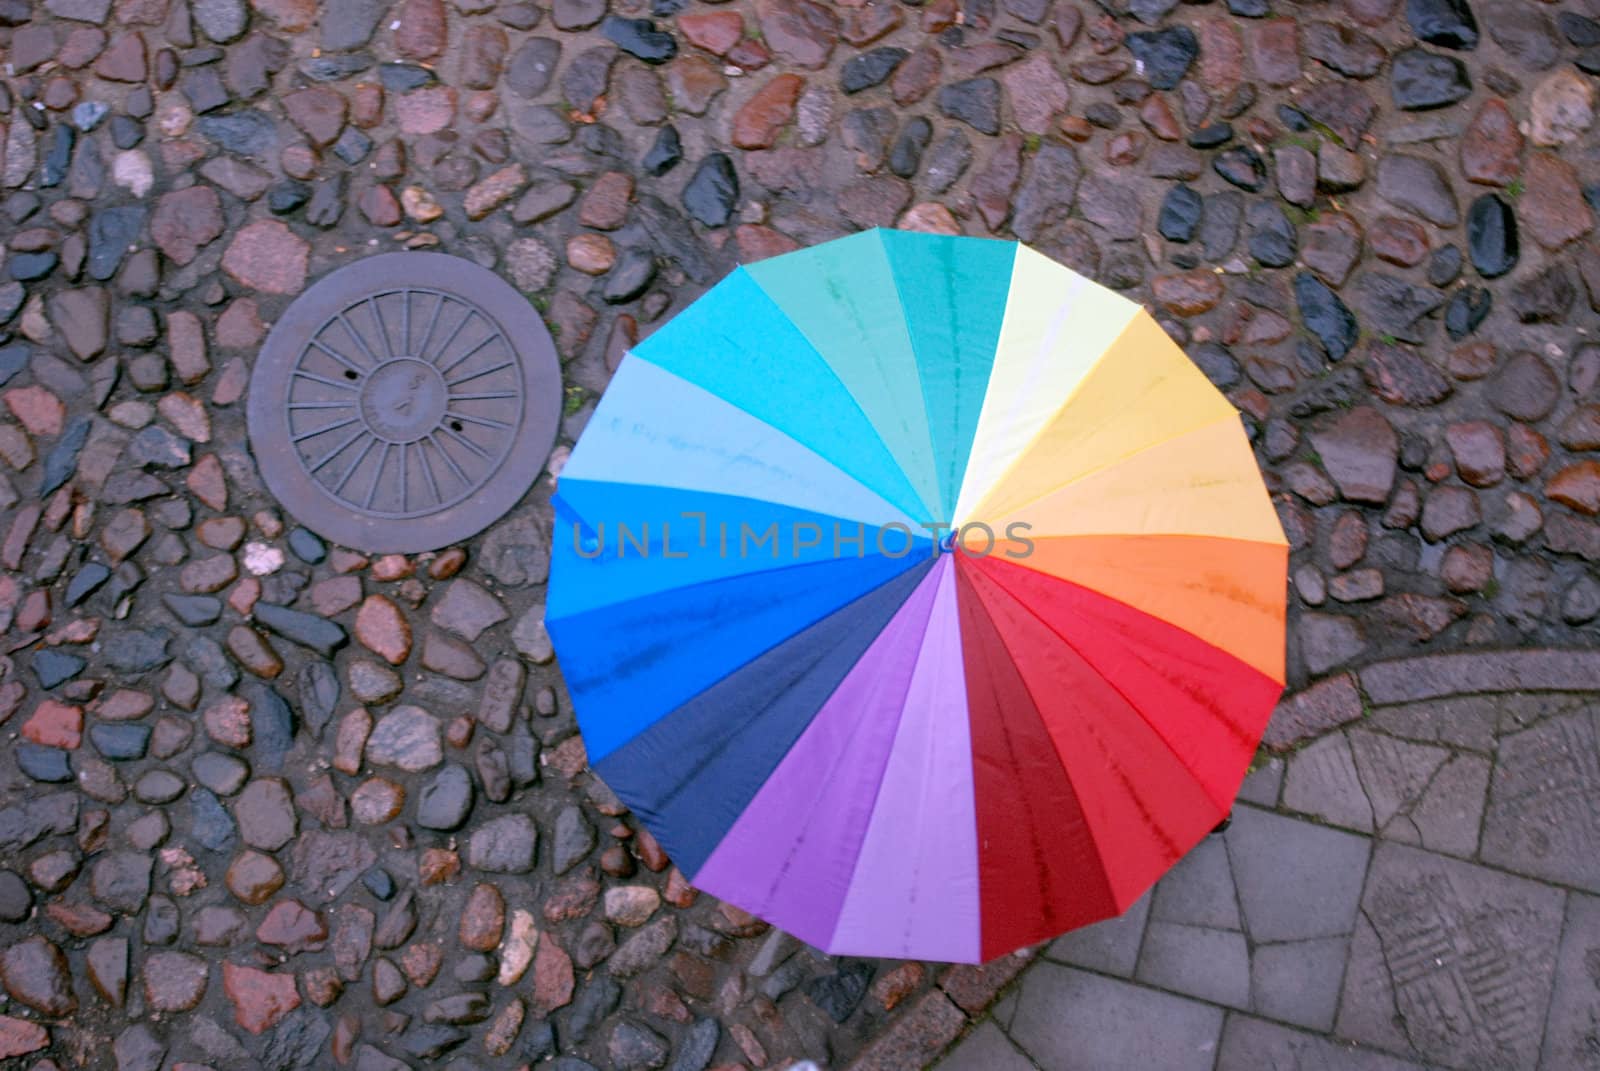 Rainbow-colored umbrella on the ancient stone pavement